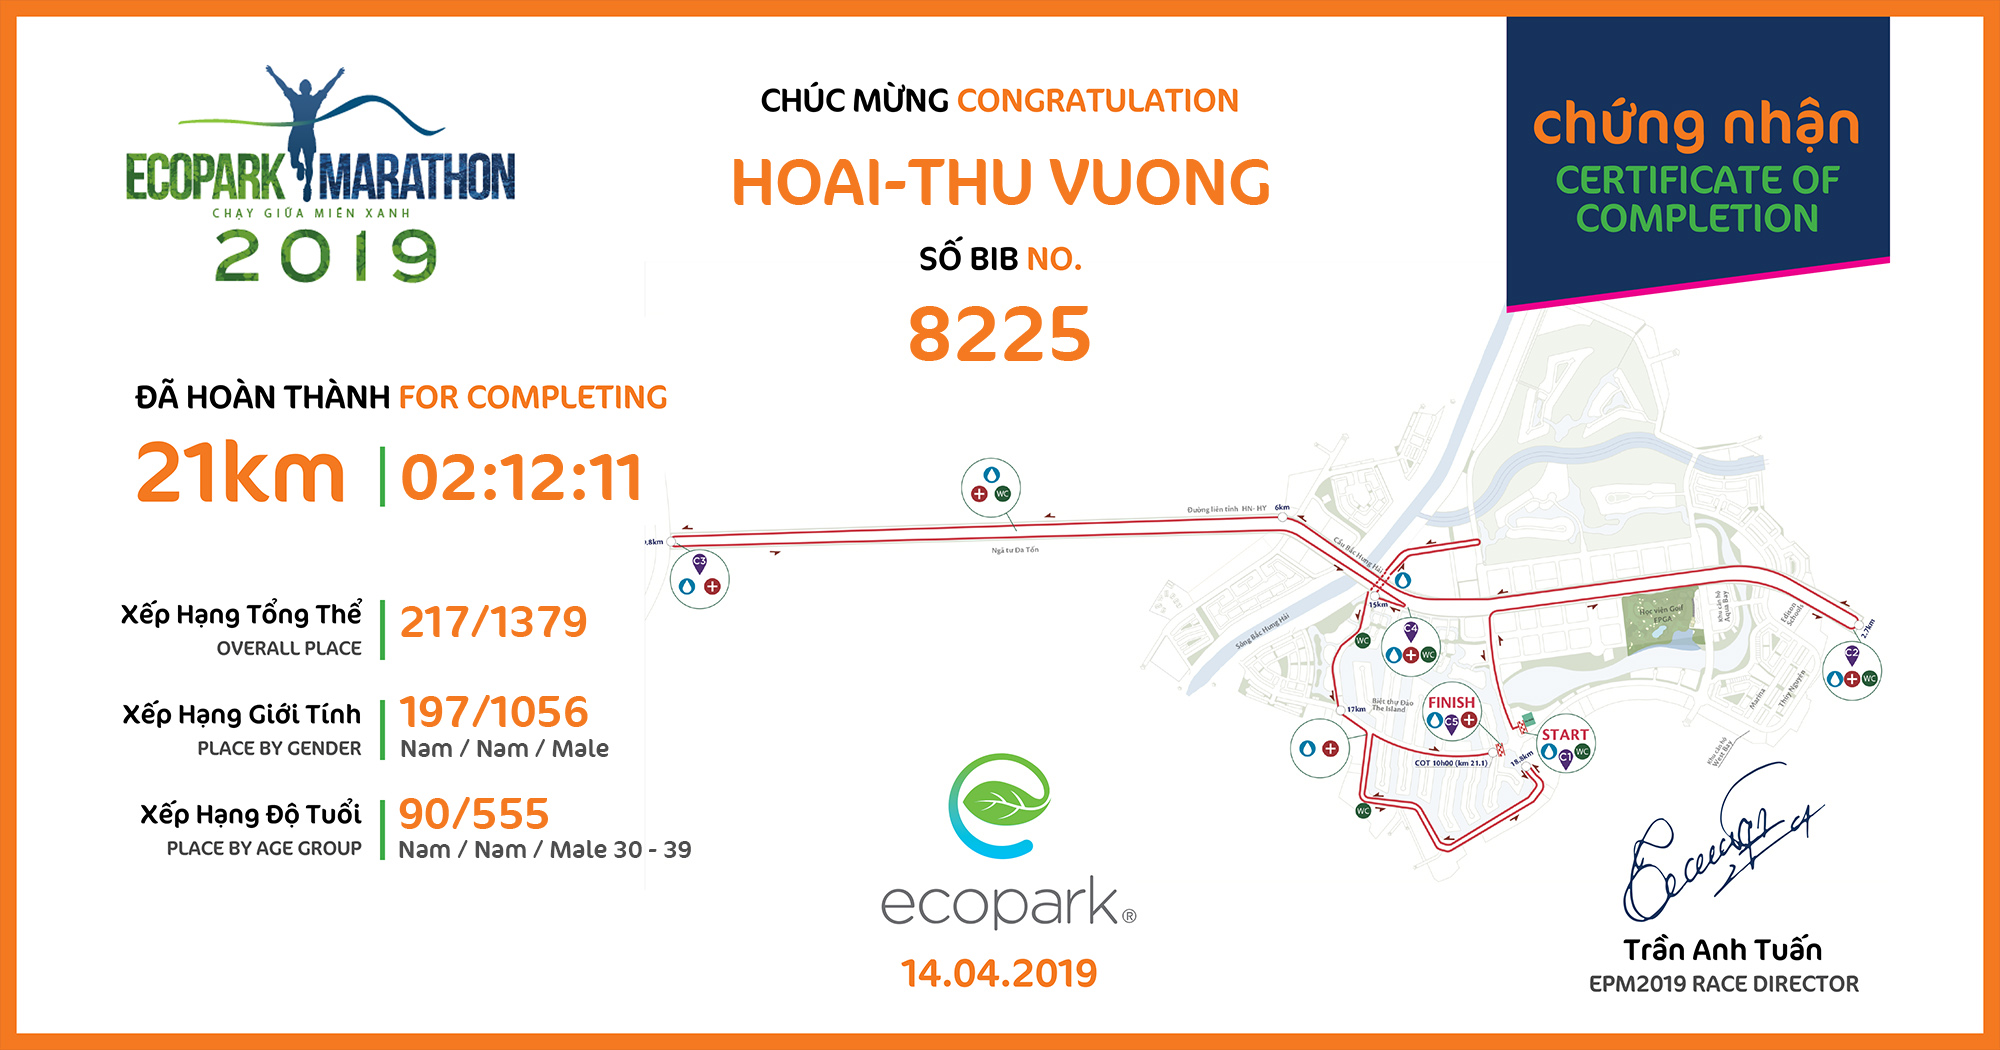 8225 - Hoai-Thu Vuong